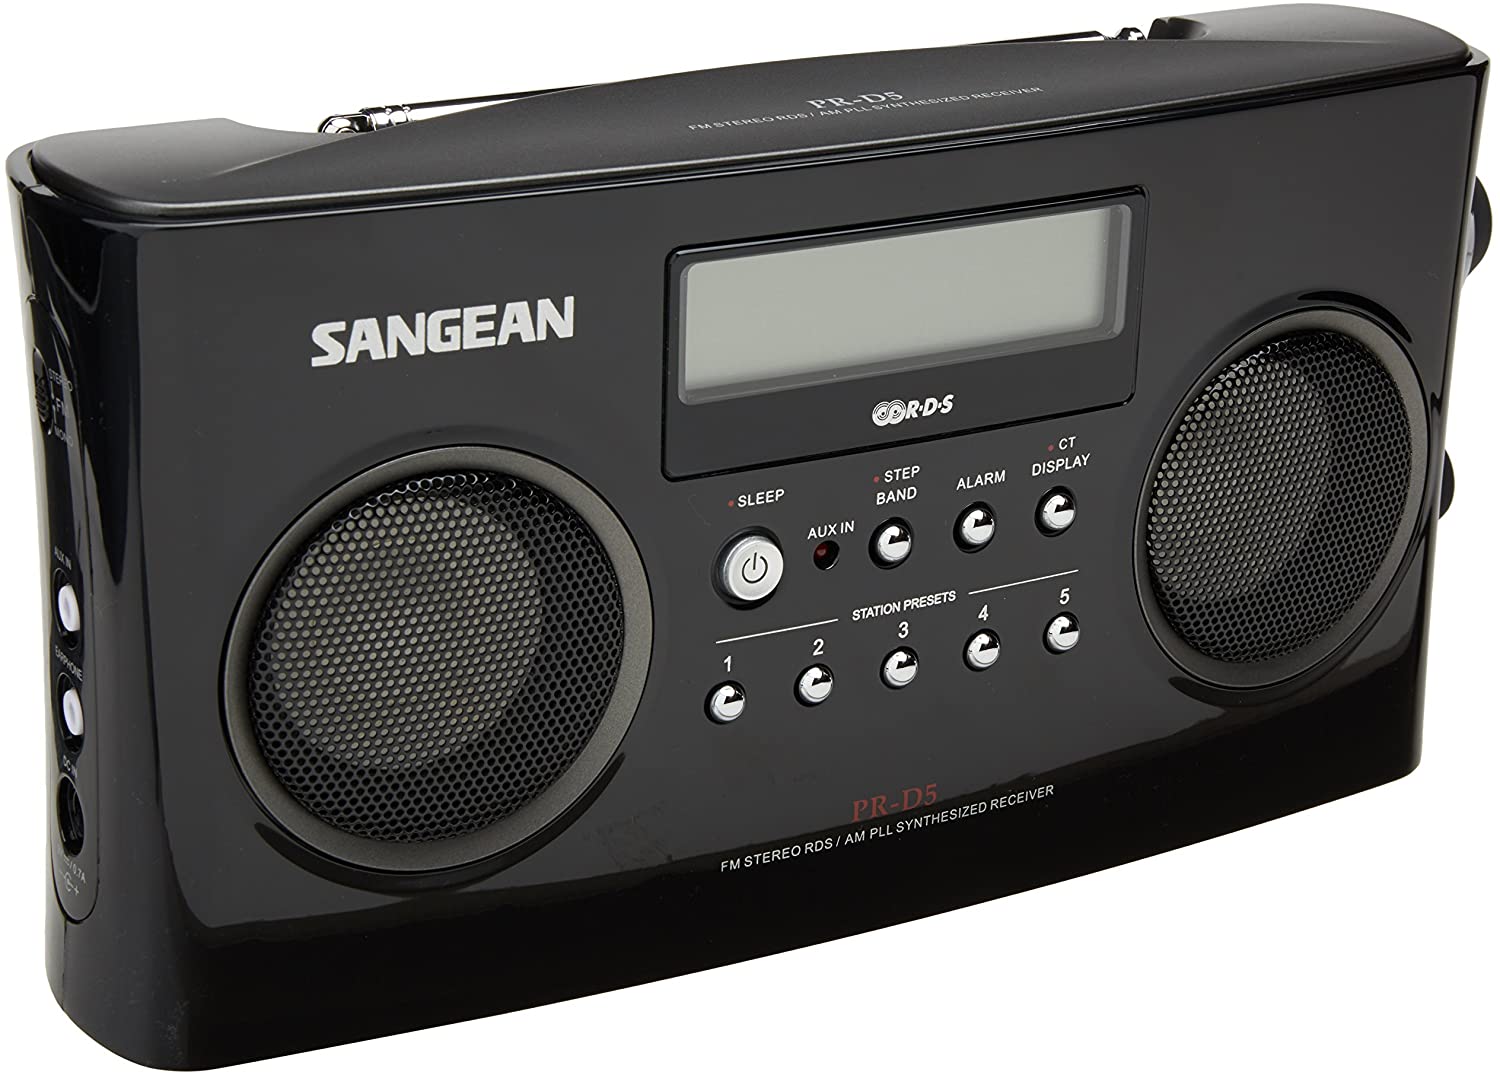 Sangean Portable AM/FM Radios, Black, PR-D5BK - image 1 of 3